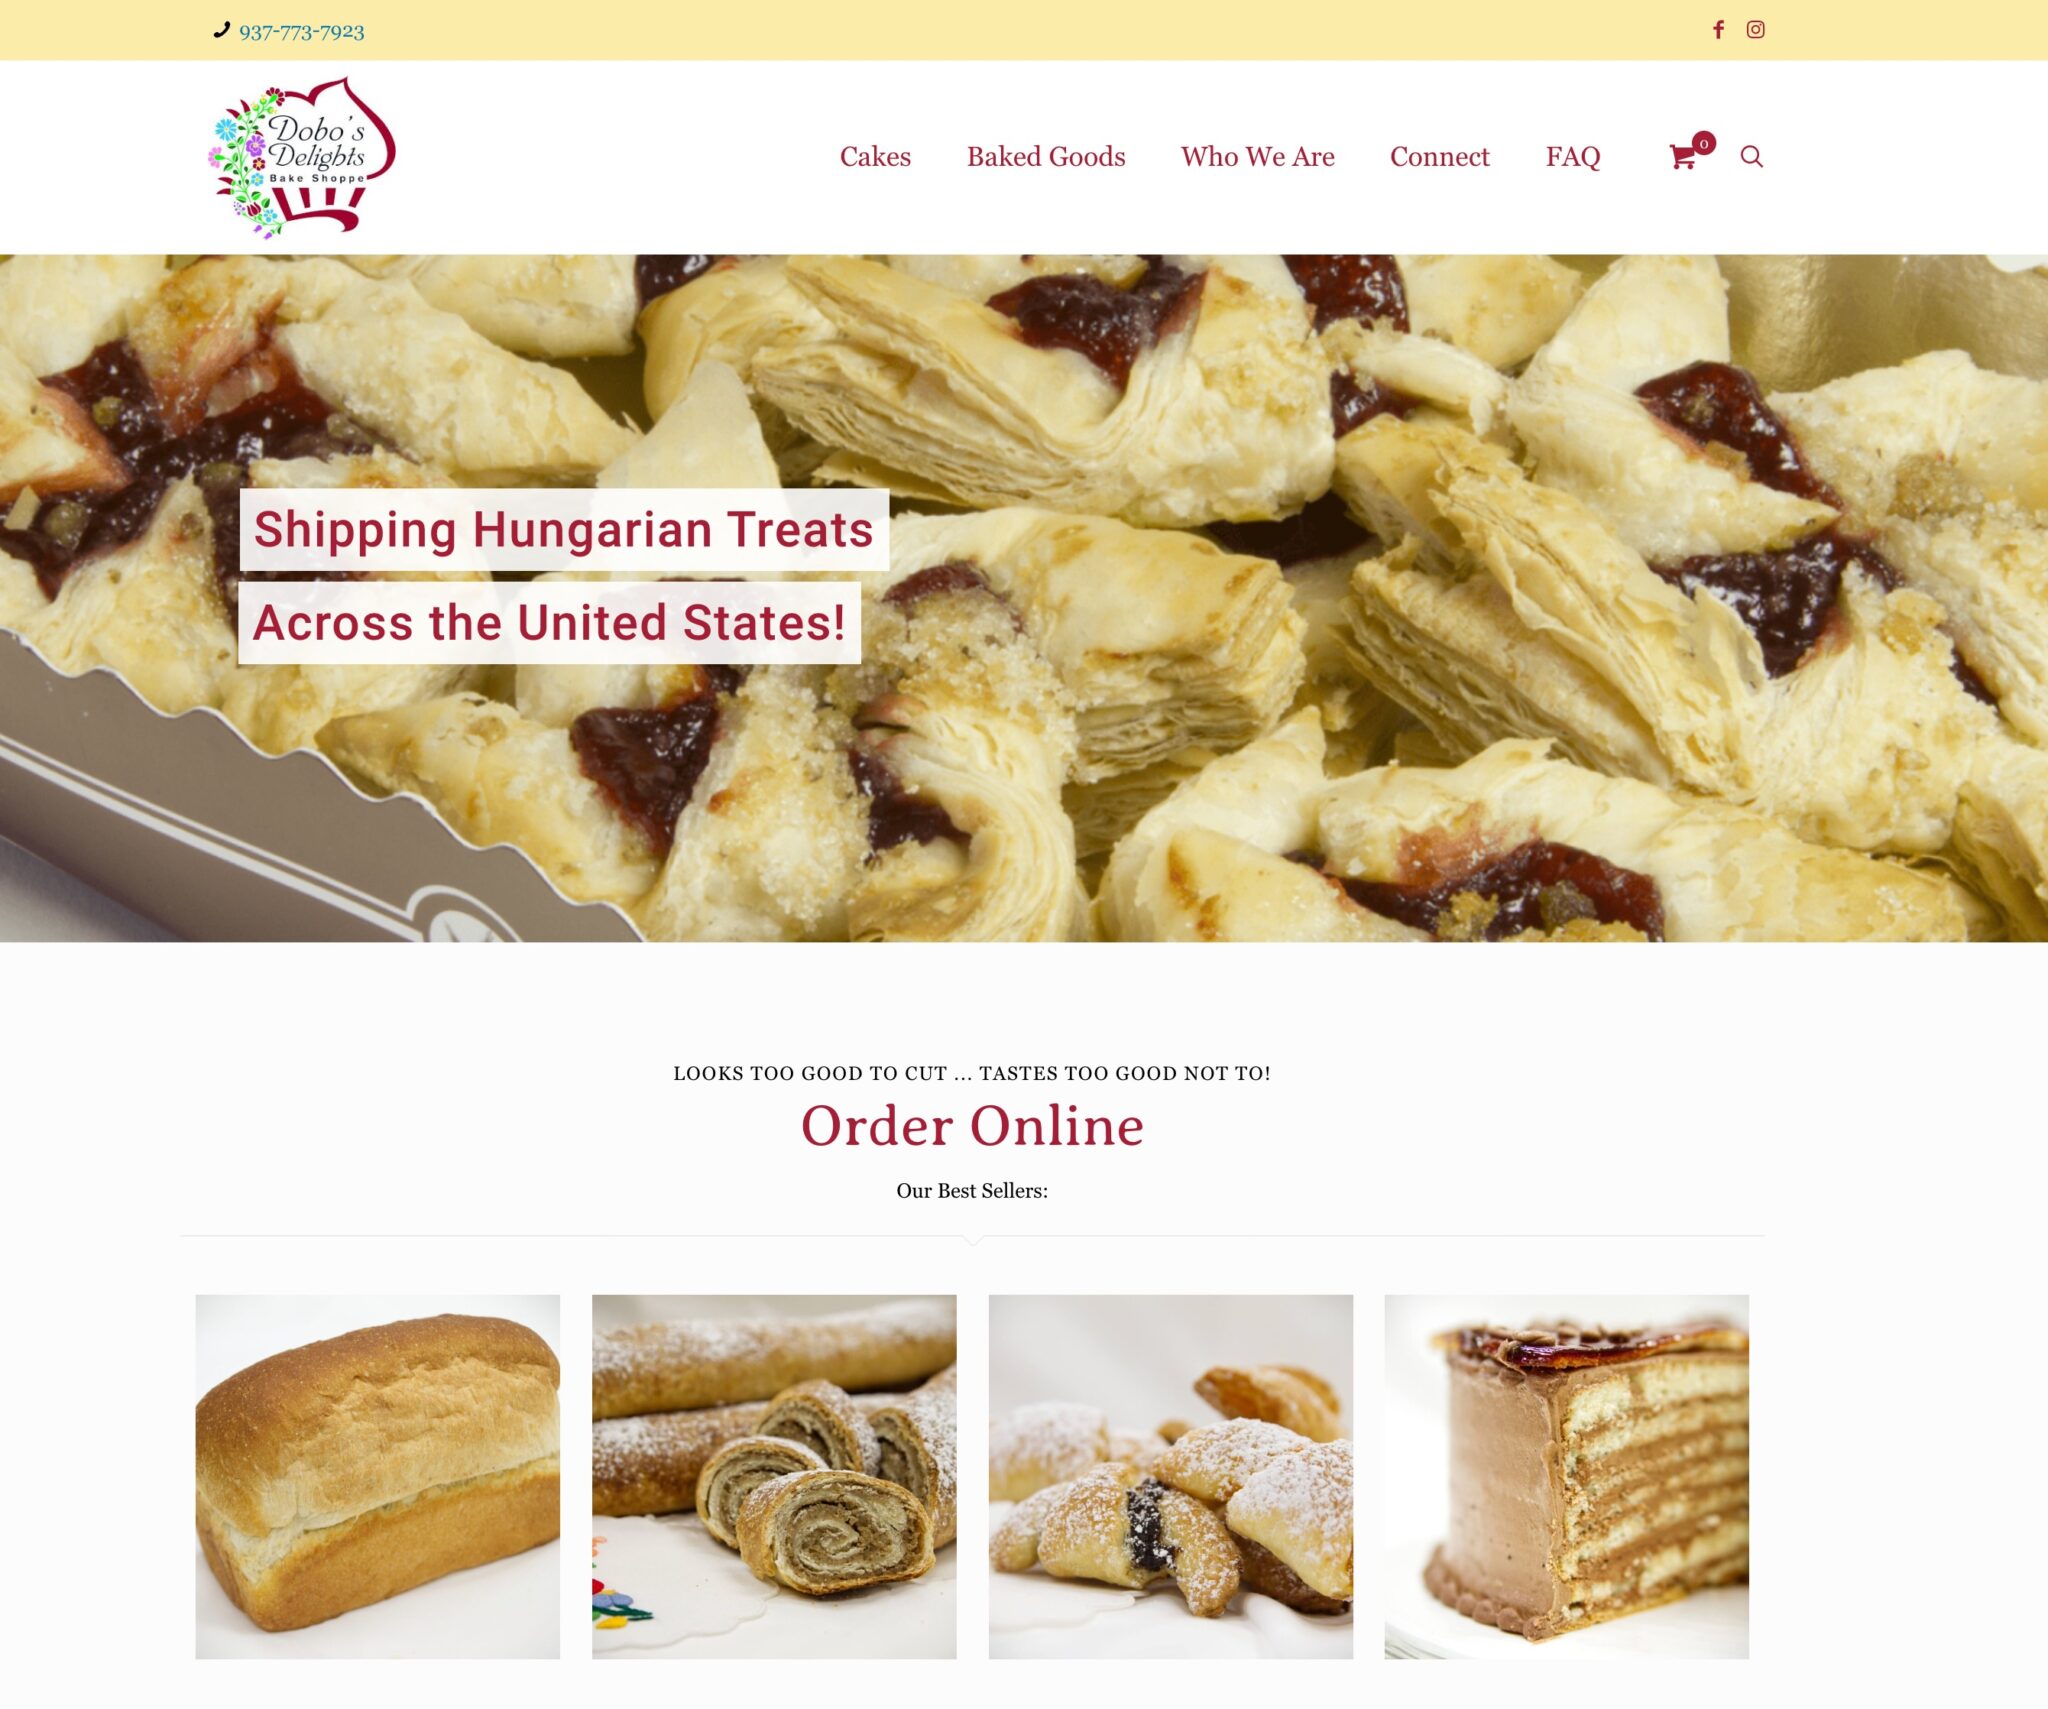 homepage of new Dobo's Delights design